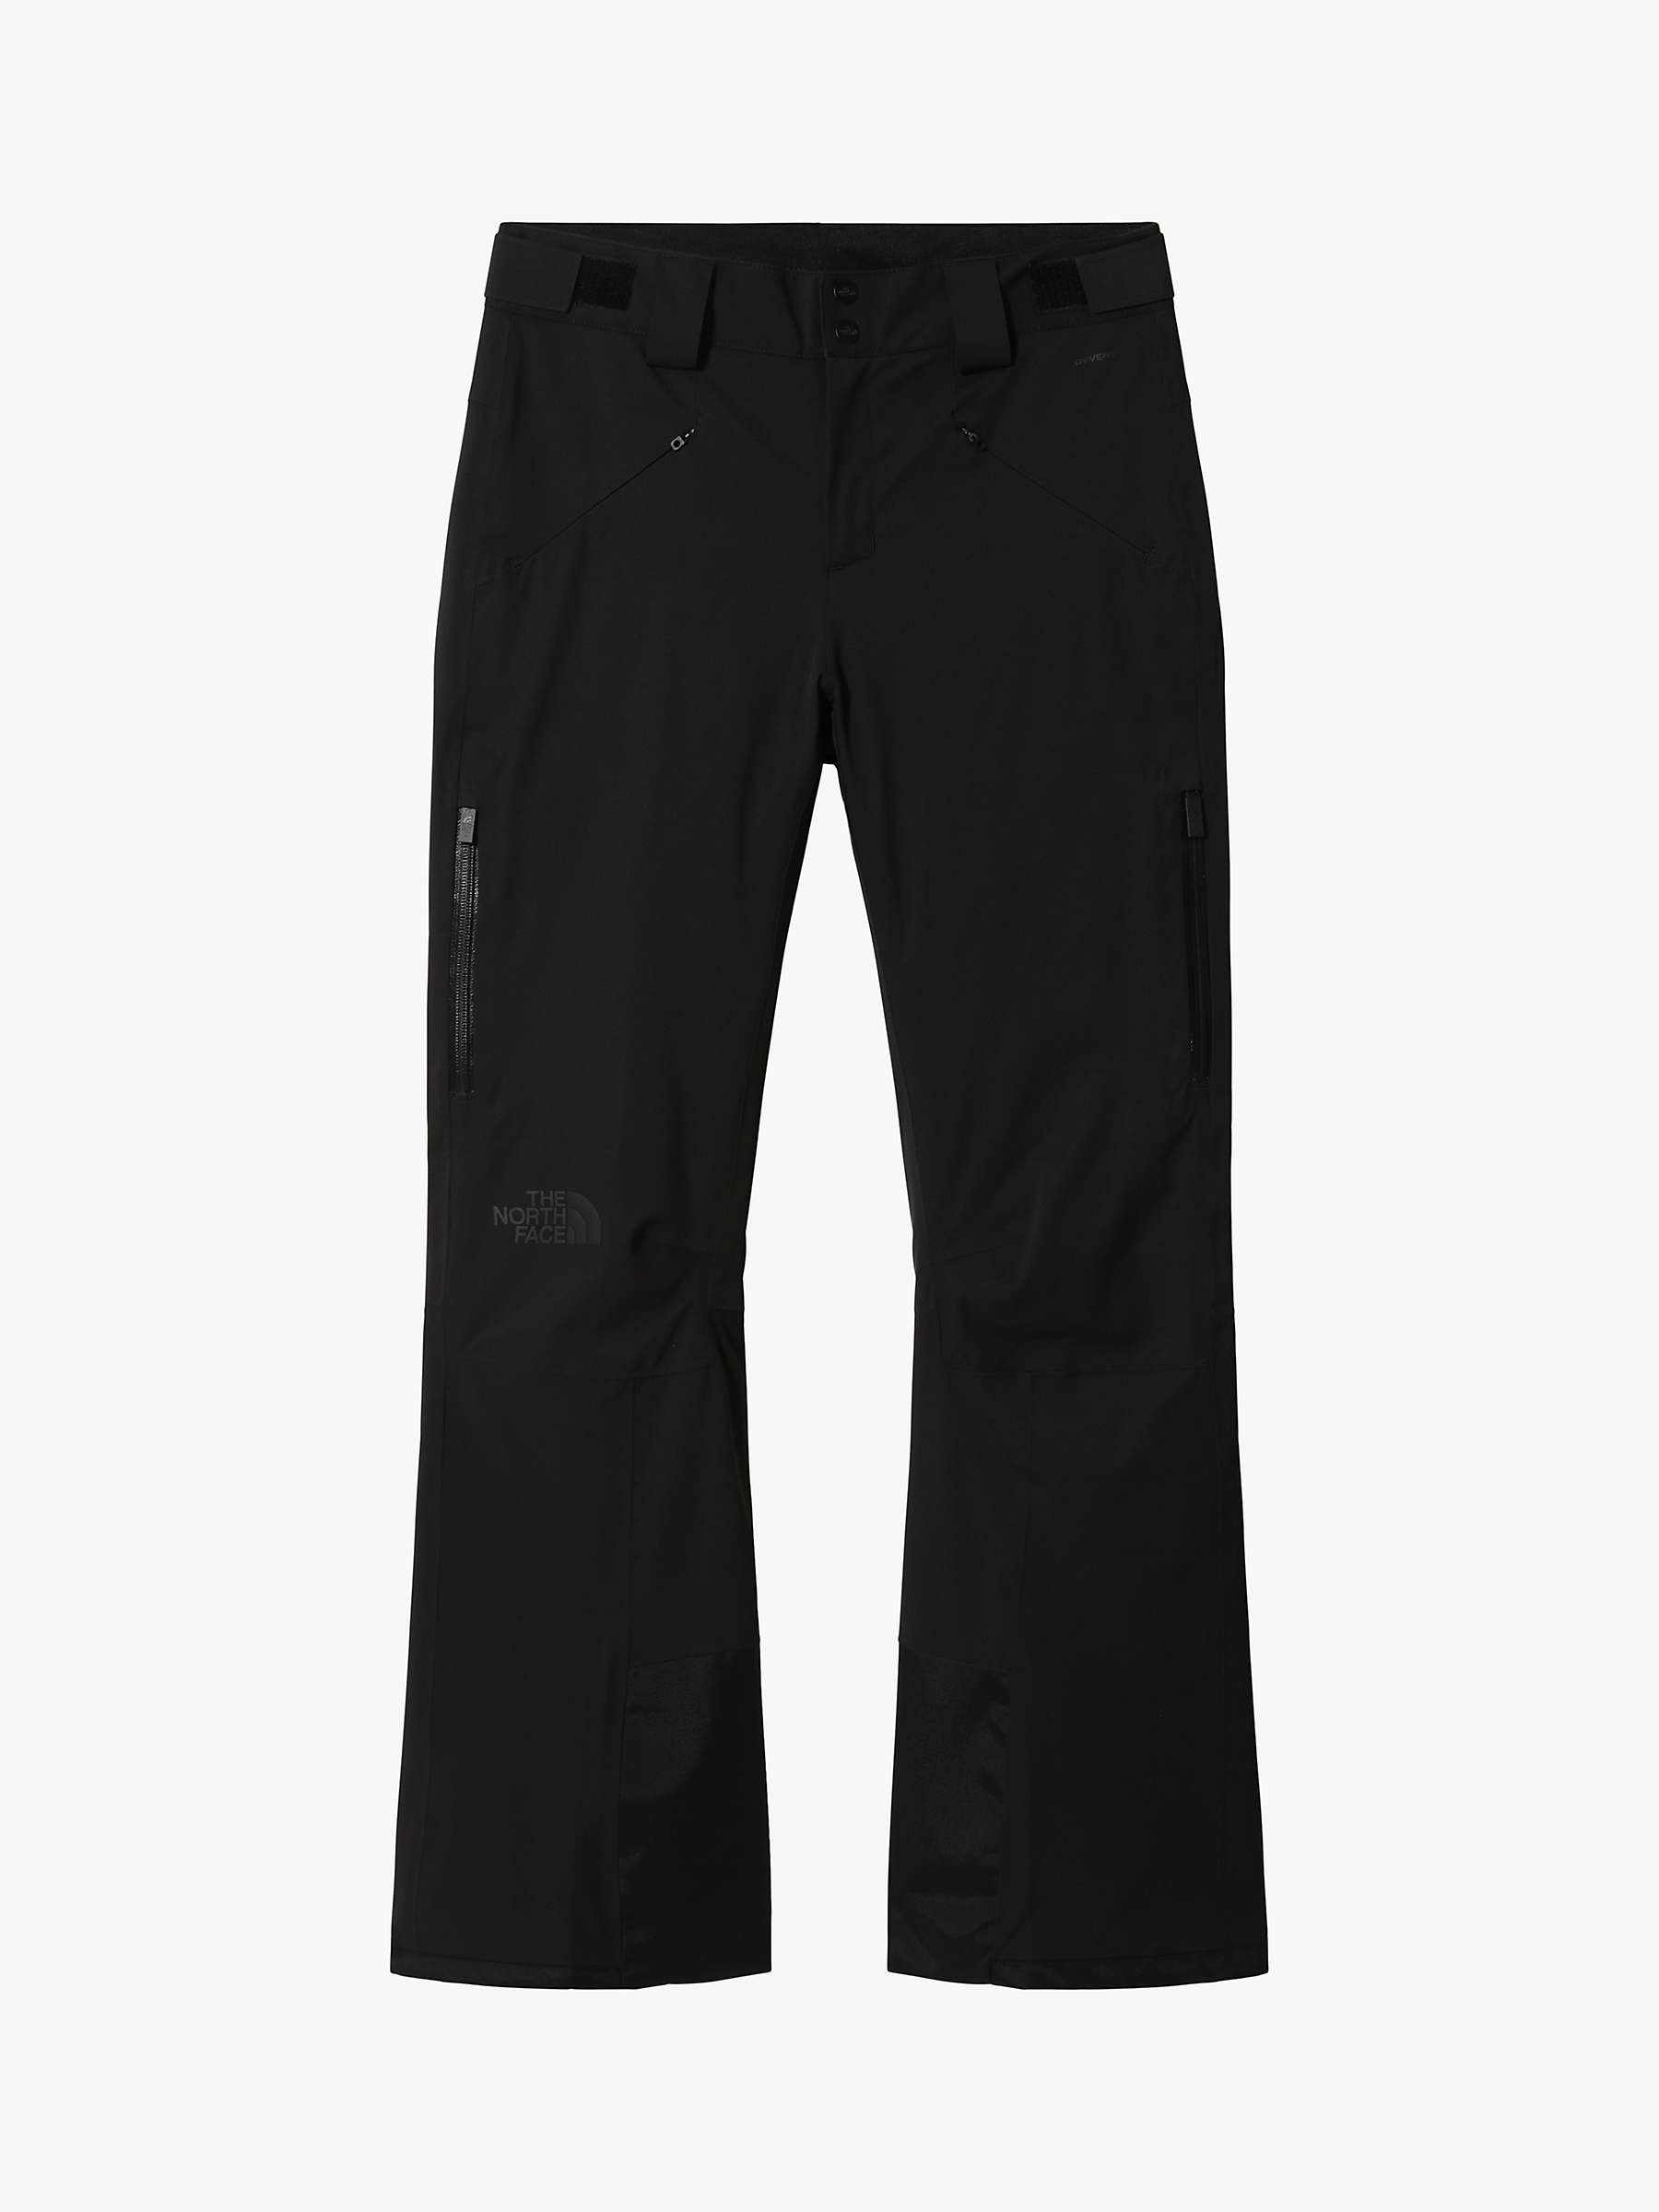 Buy The North Face Lenado Women's Waterproof Ski Trousers Online at johnlewis.com